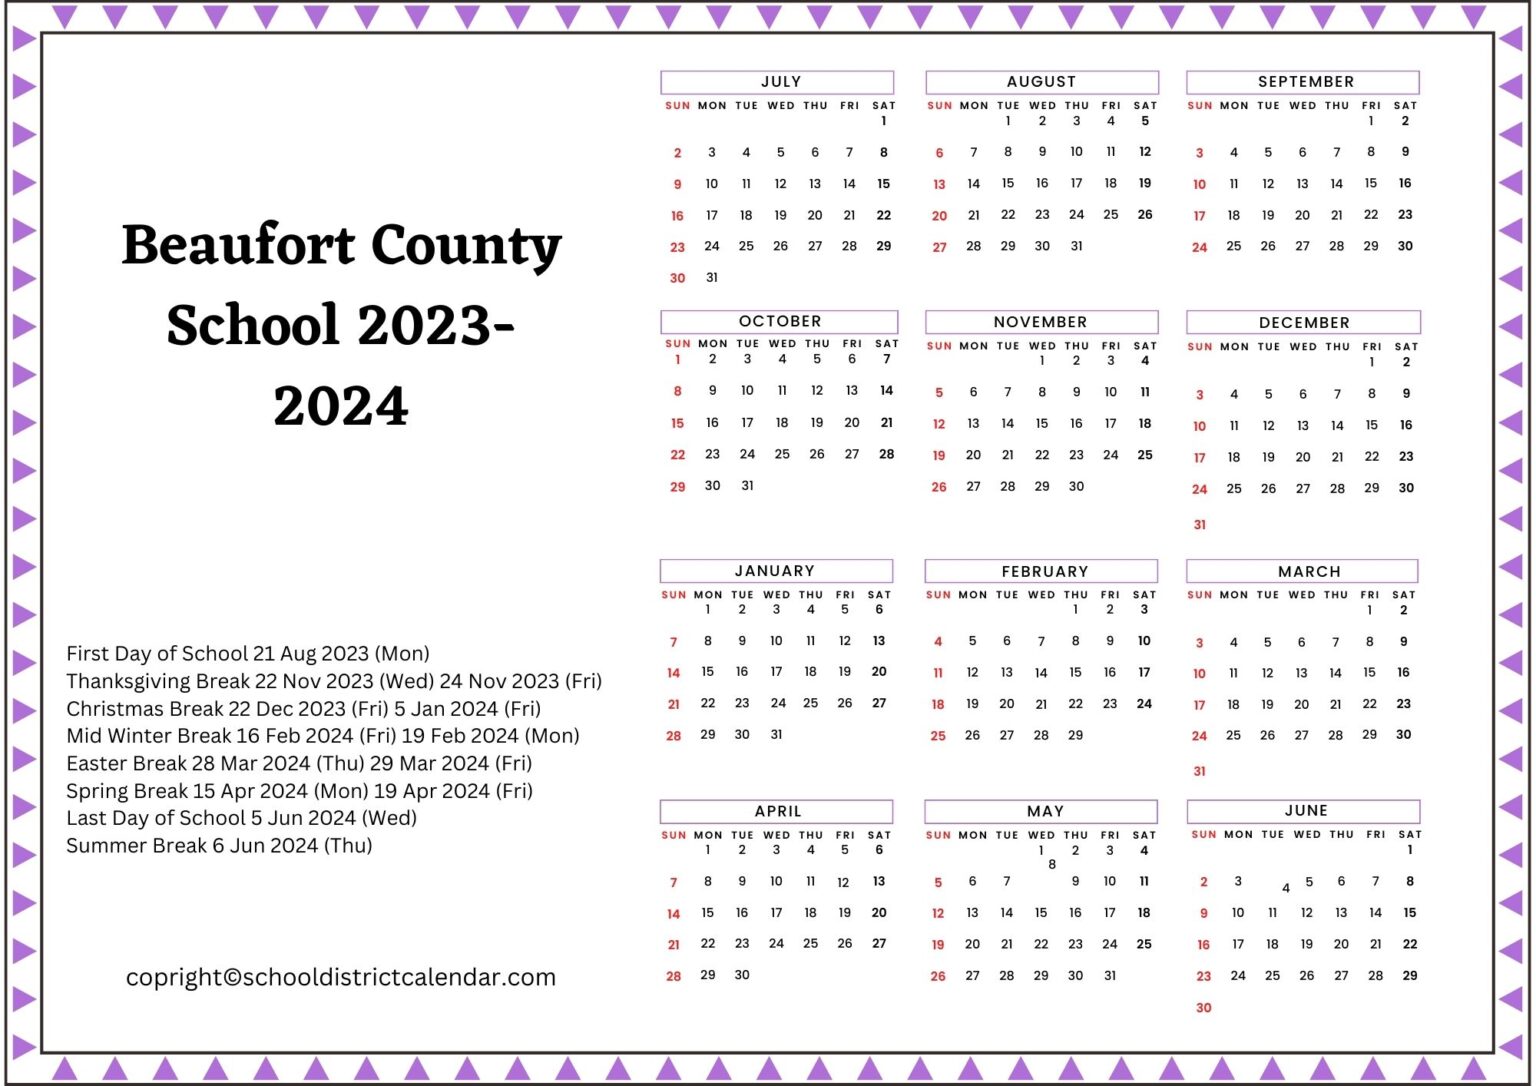 Beaufort County School Calendar Holidays 2023 2024